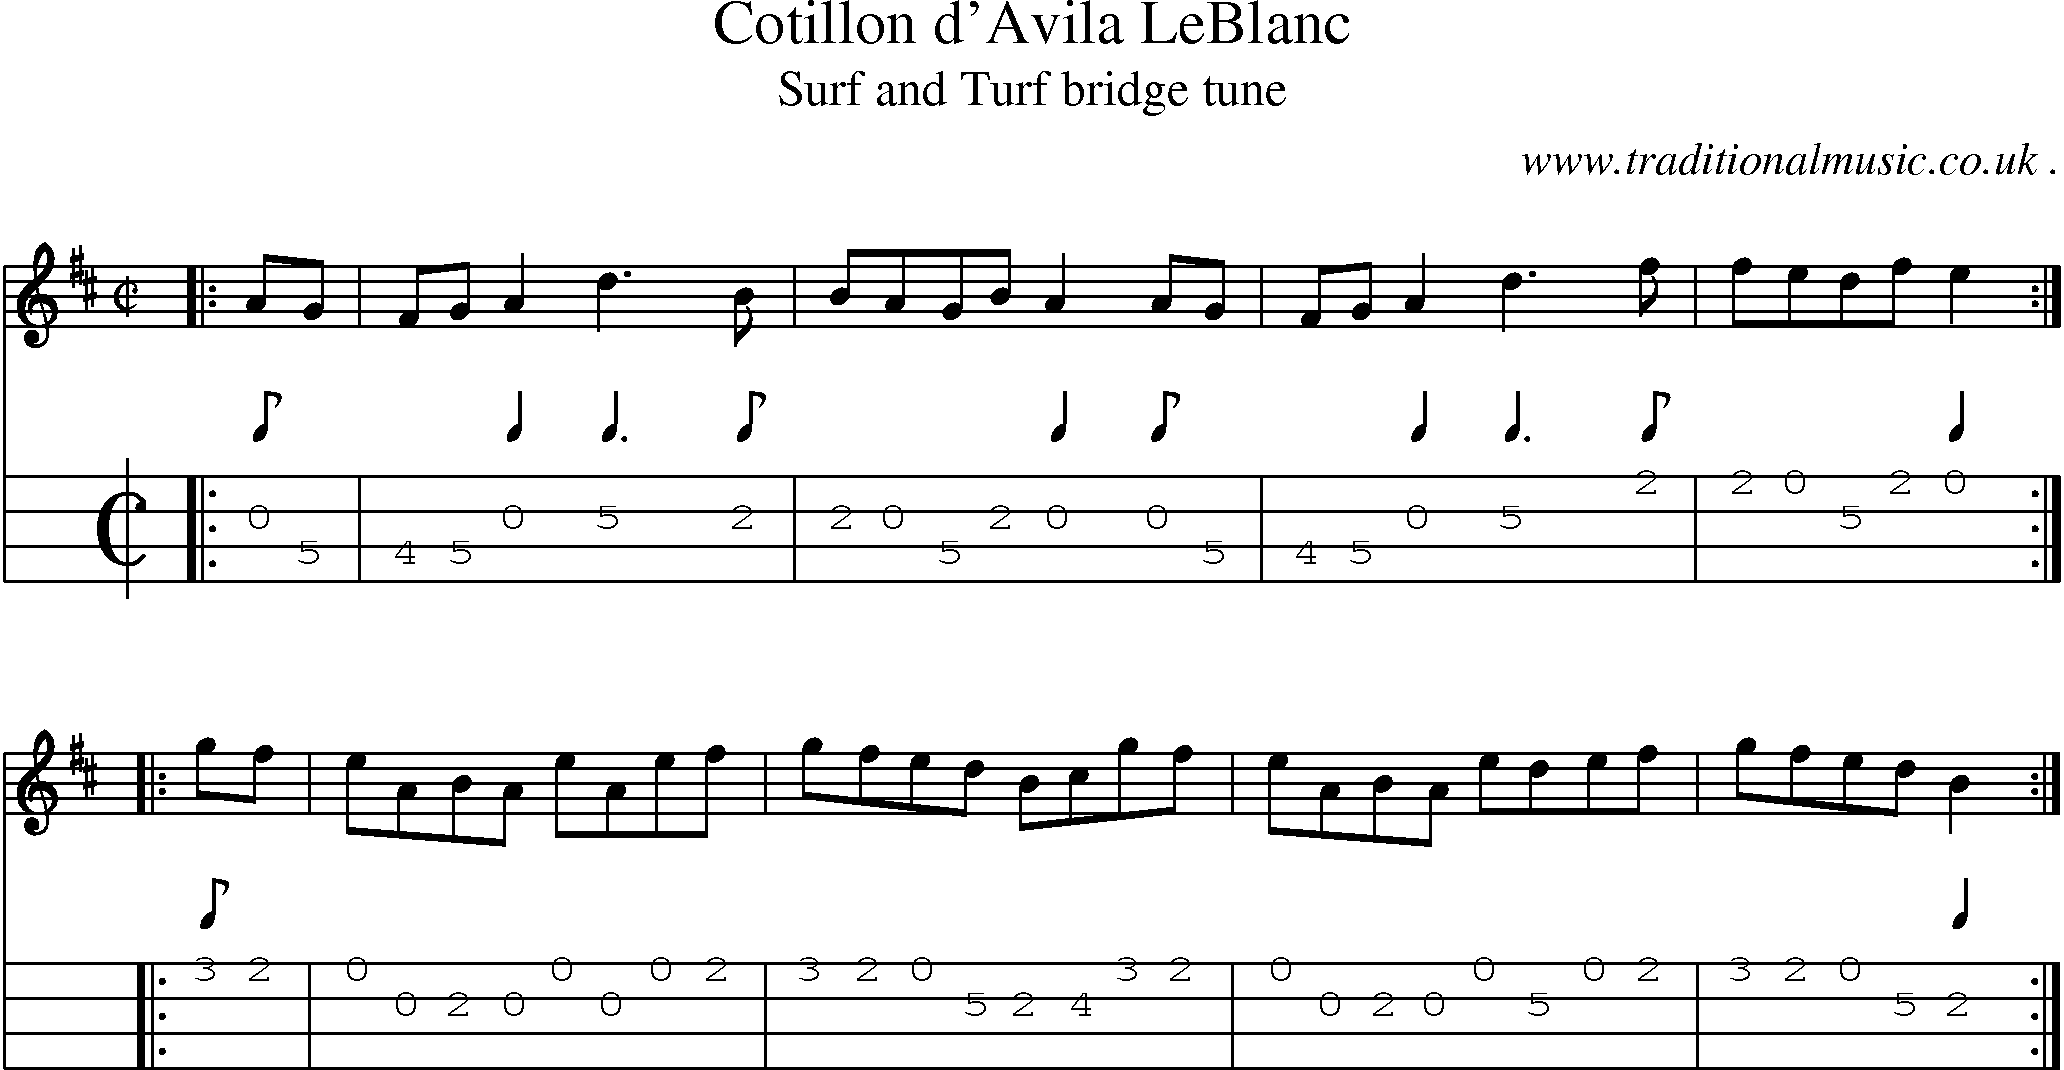 Sheet-music  score, Chords and Mandolin Tabs for Cotillon Davila Leblanc